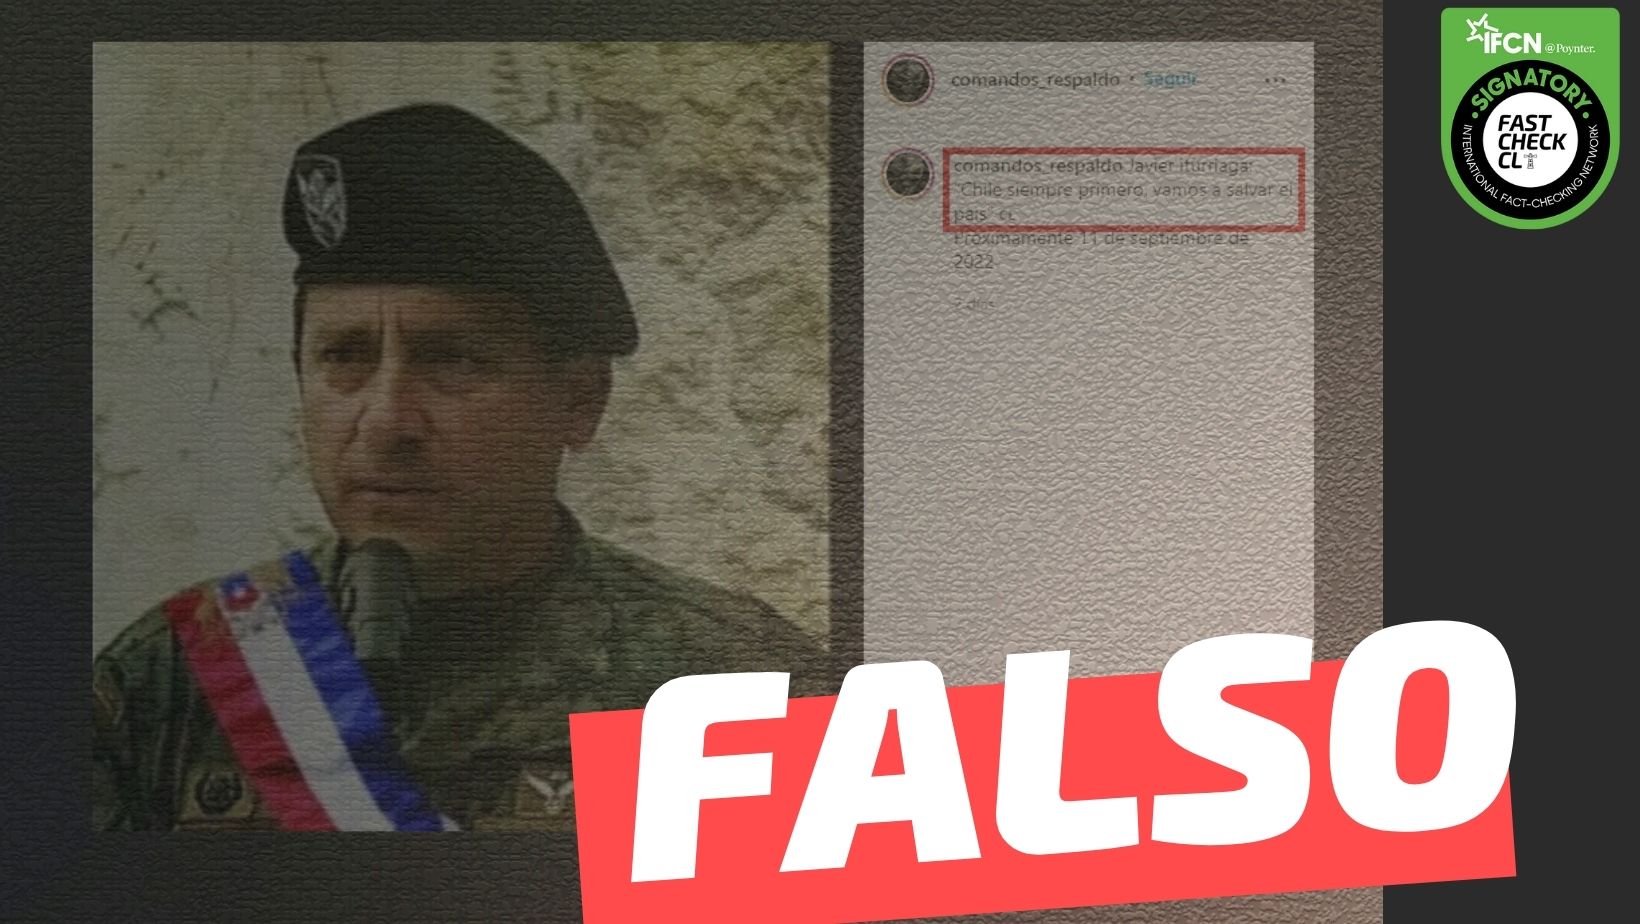 You are currently viewing General Iturriaga: “Chile siempre primero, vamos a salvar el país”:#Falso